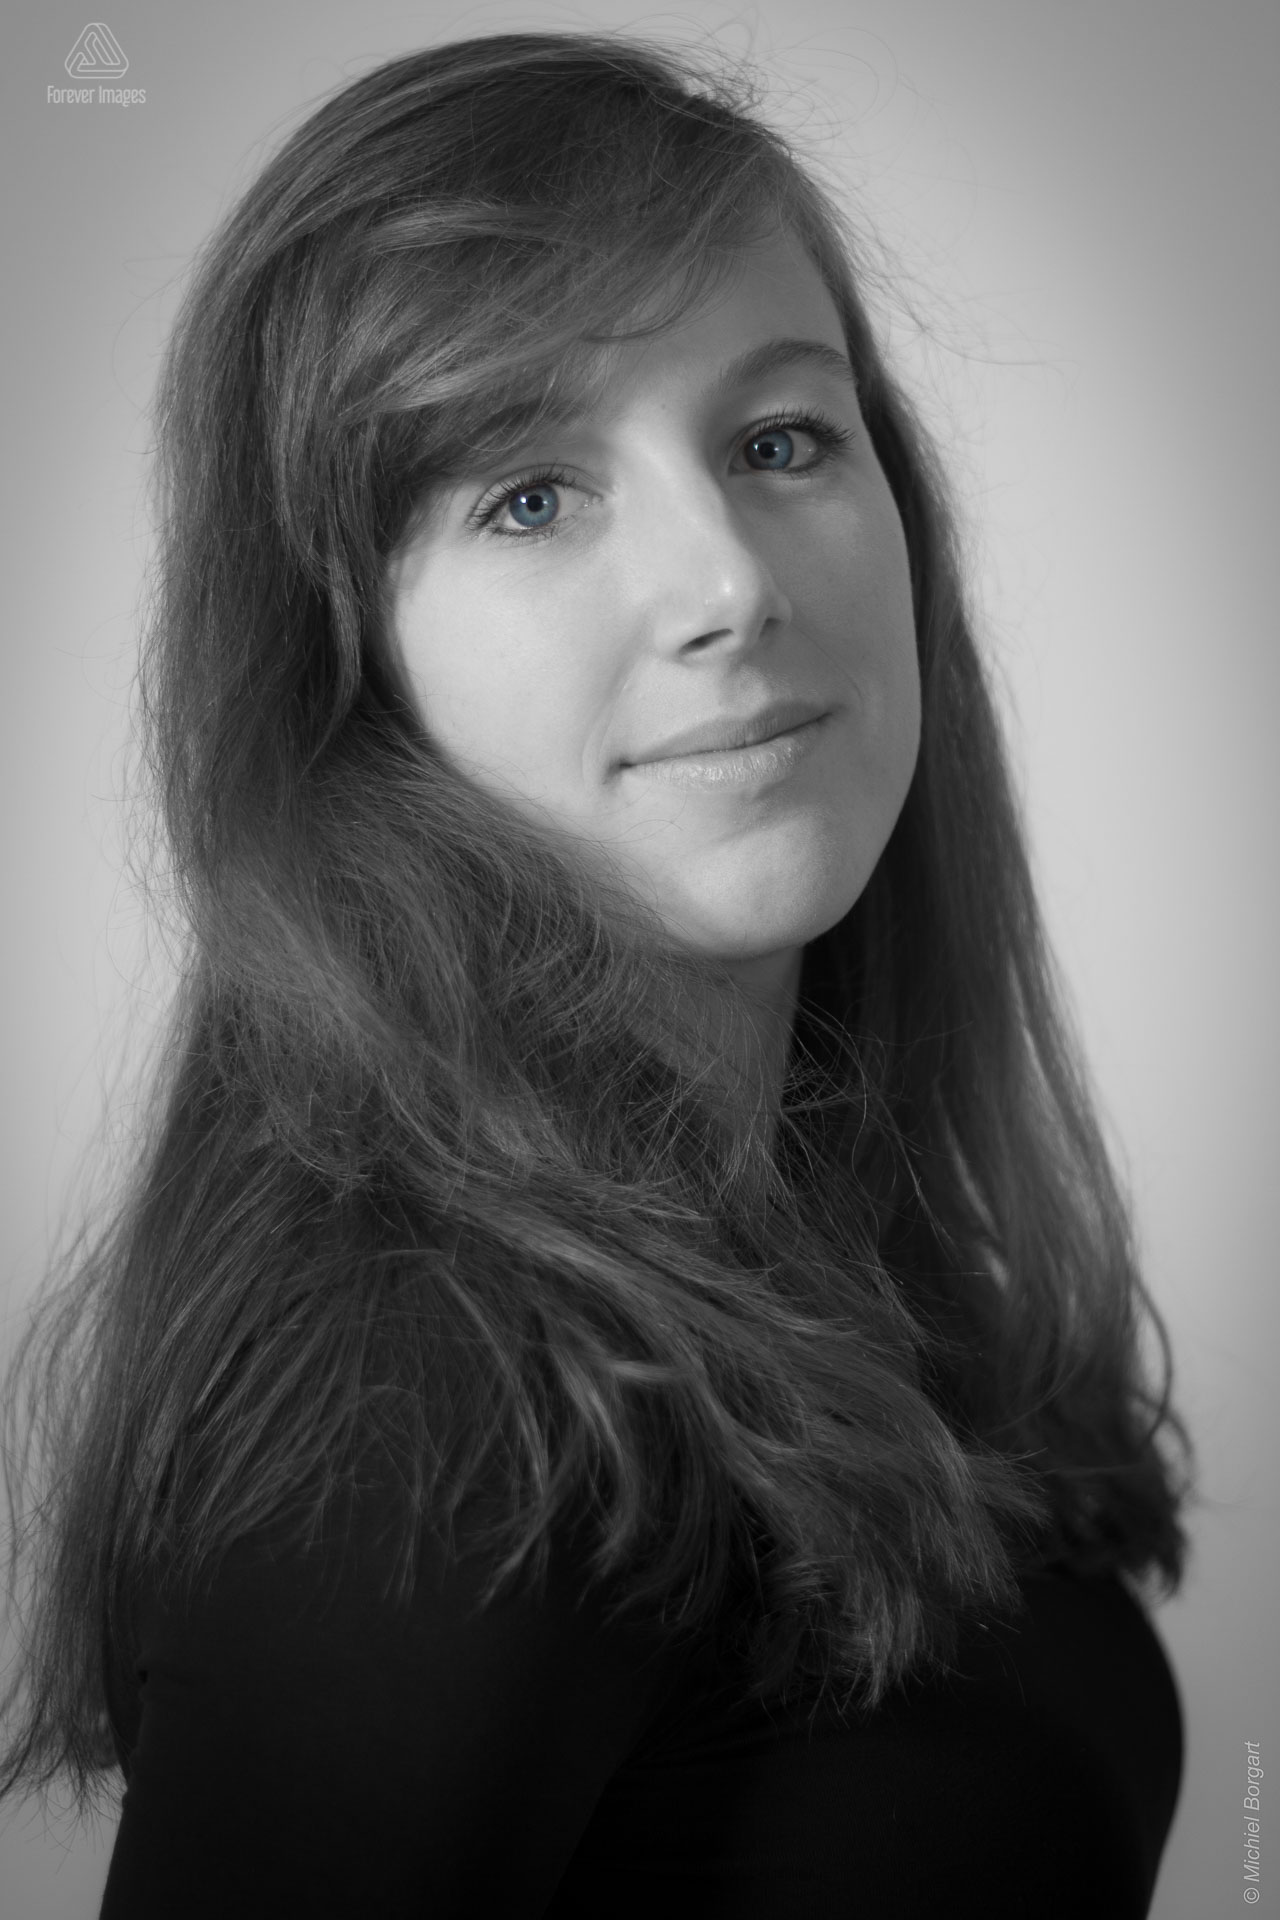 Zwart-witfoto jonge dame met lieve glimlach | Lisa Frenk | Portretfotograaf Michiel Borgart - Forever Images.